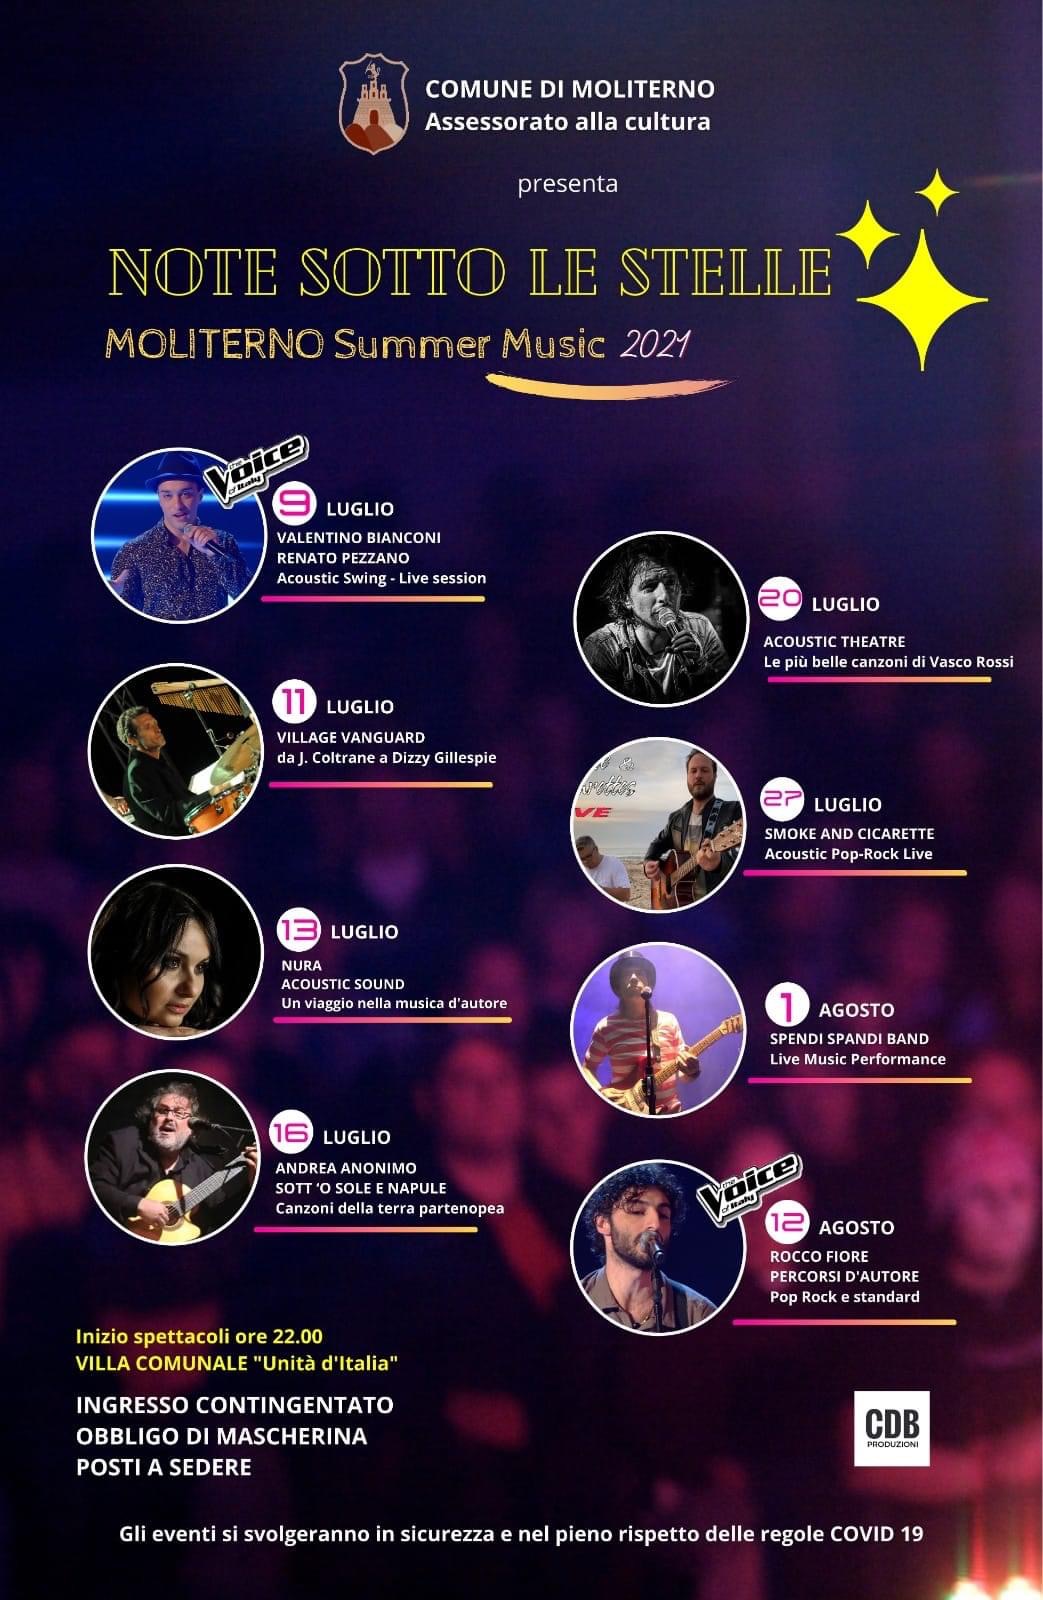 Moliterno Summer Music 2021